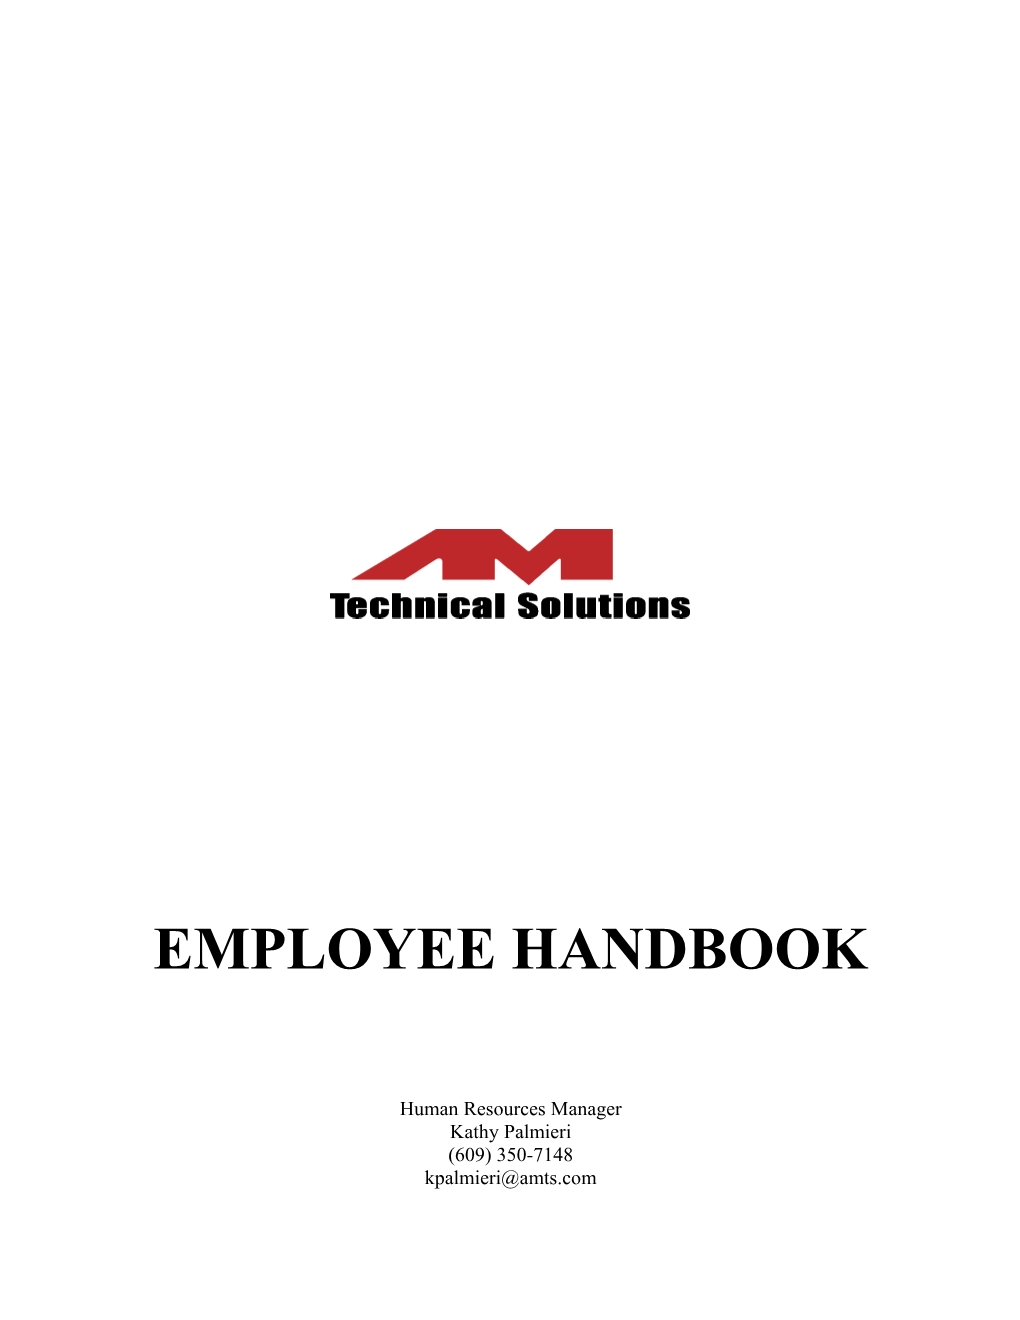 Employee Handbook s1